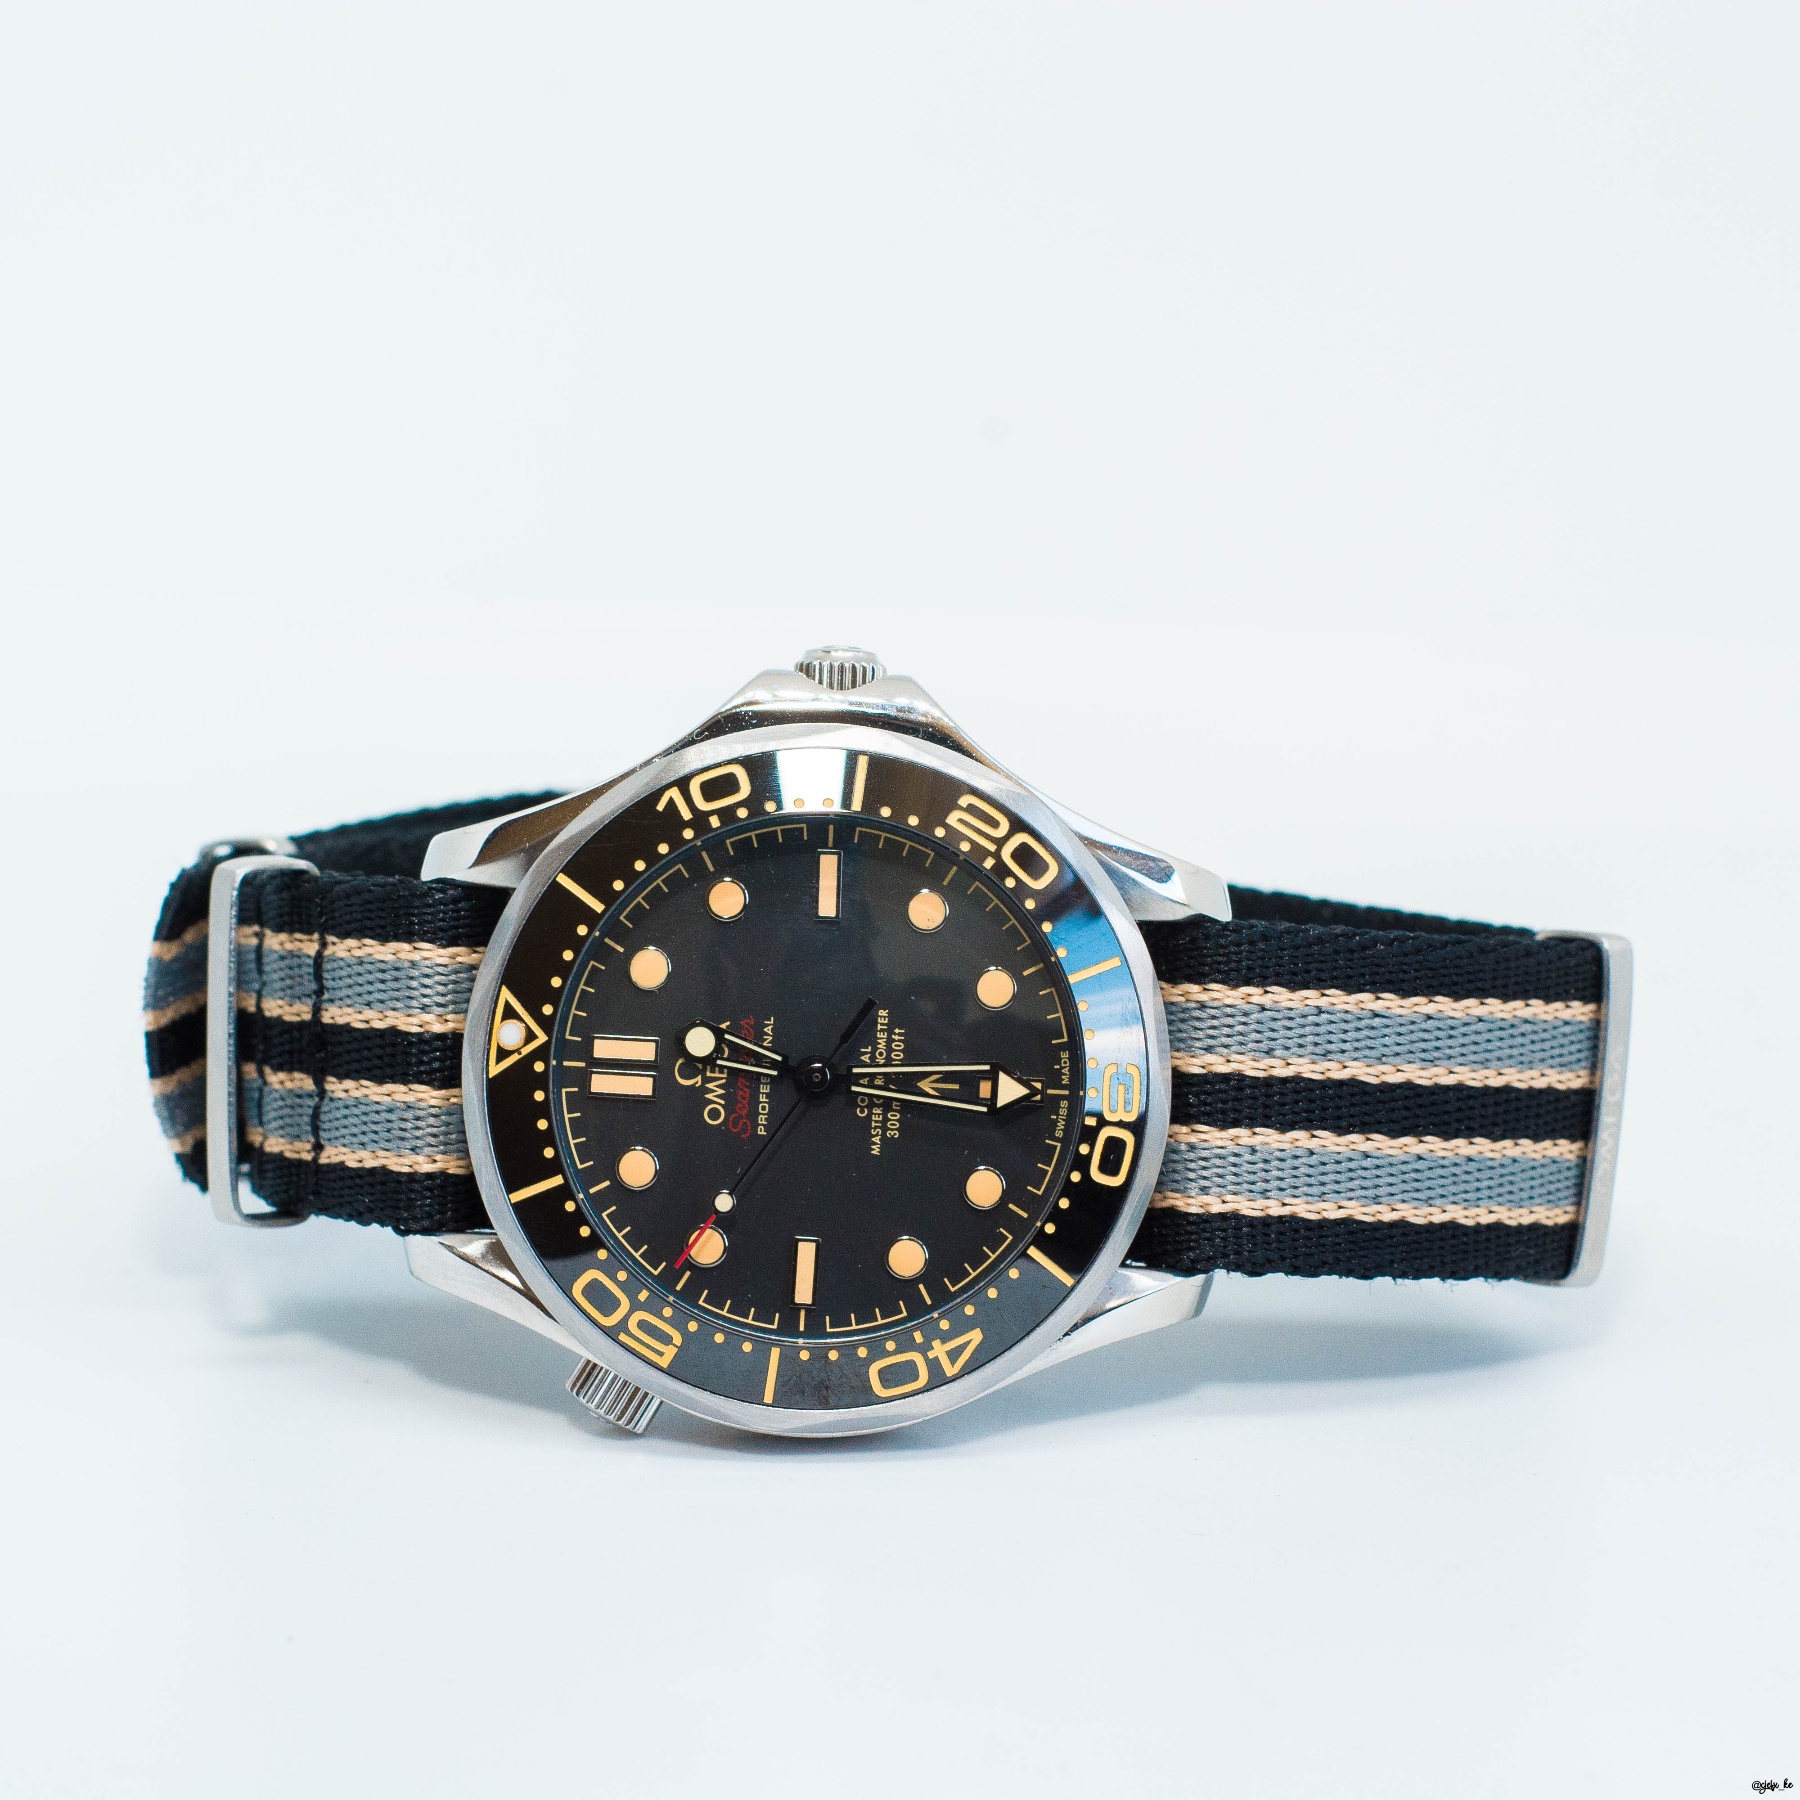 Omega sea master diver 300 meters James bond Nato straps watch for sale in Nairobi Kenya at trendsasa